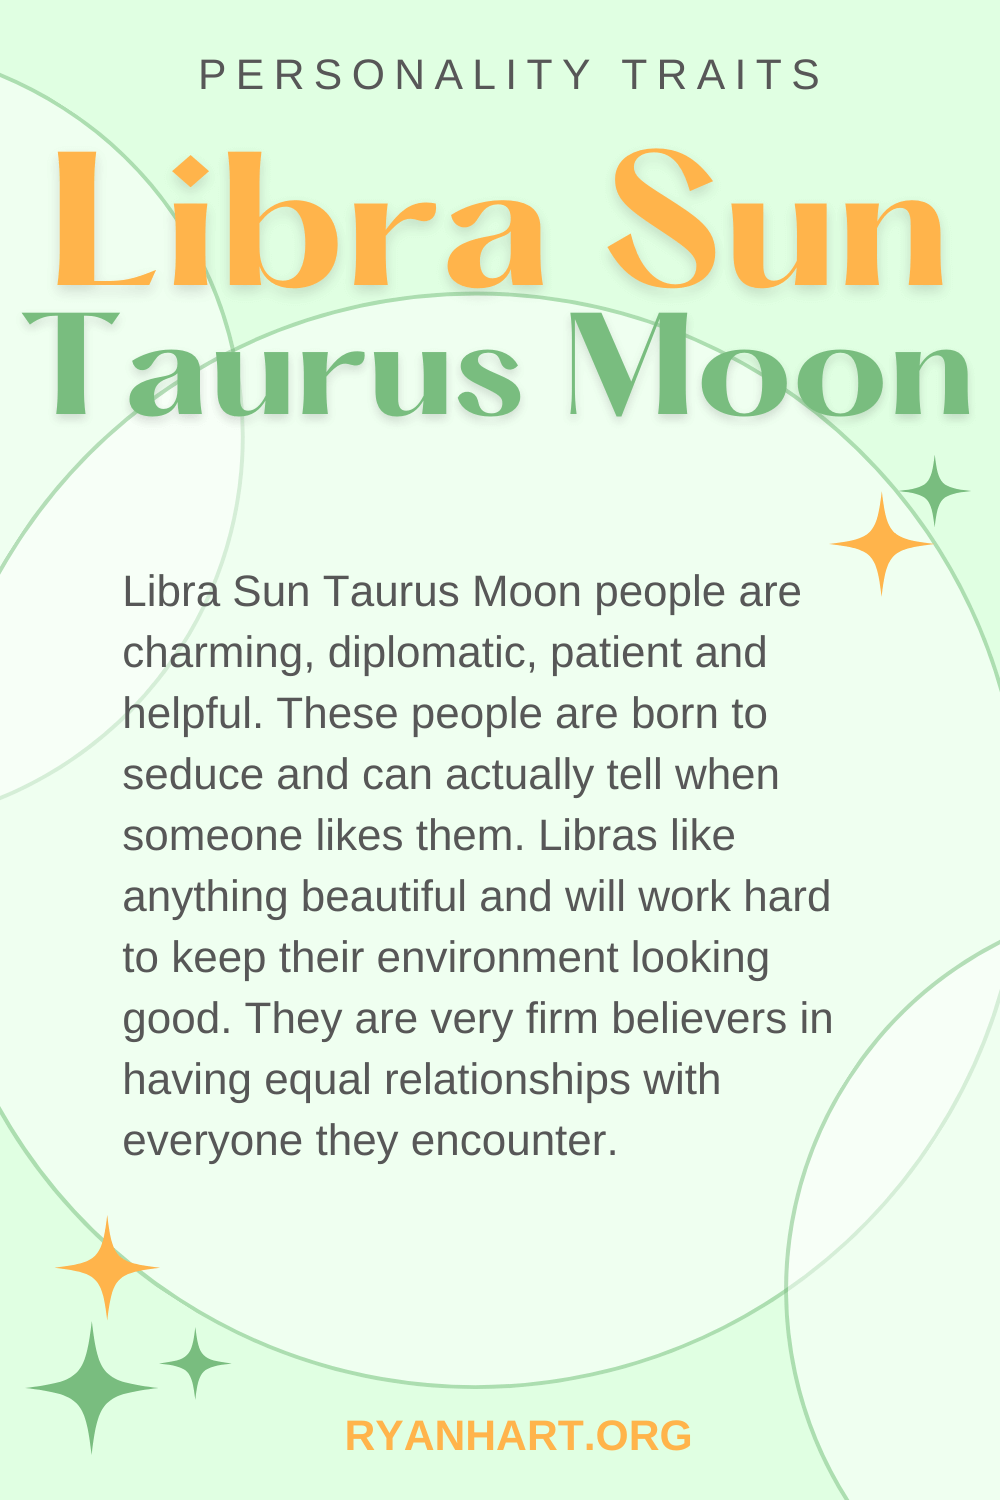  Libra Sun Taurus លក្ខណៈបុគ្គលិកលក្ខណៈ